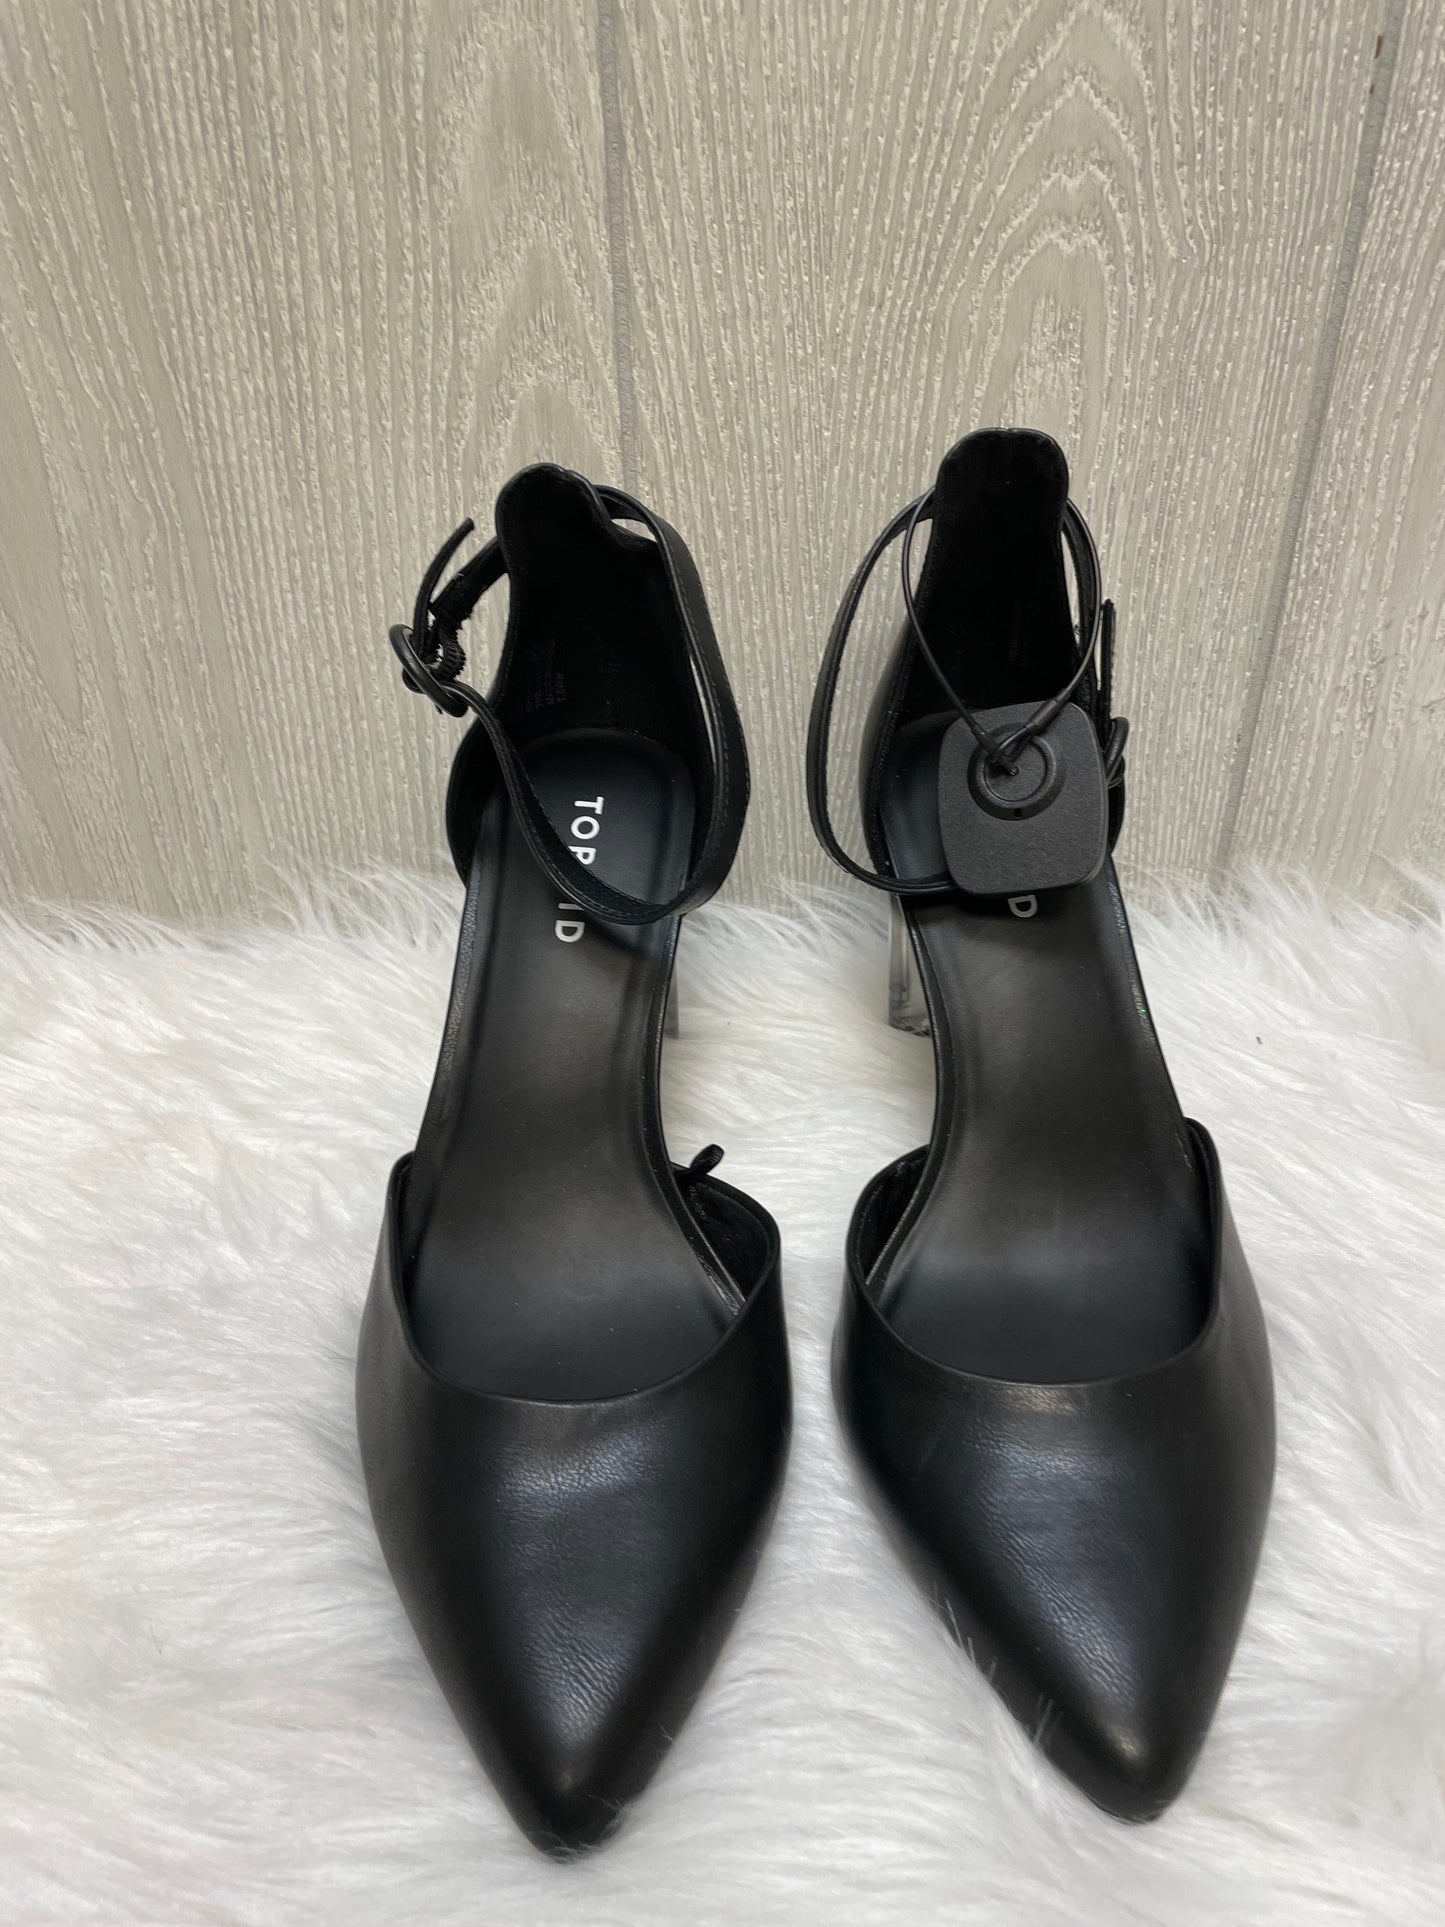 Black Shoes Heels Stiletto Torrid, Size 7.5